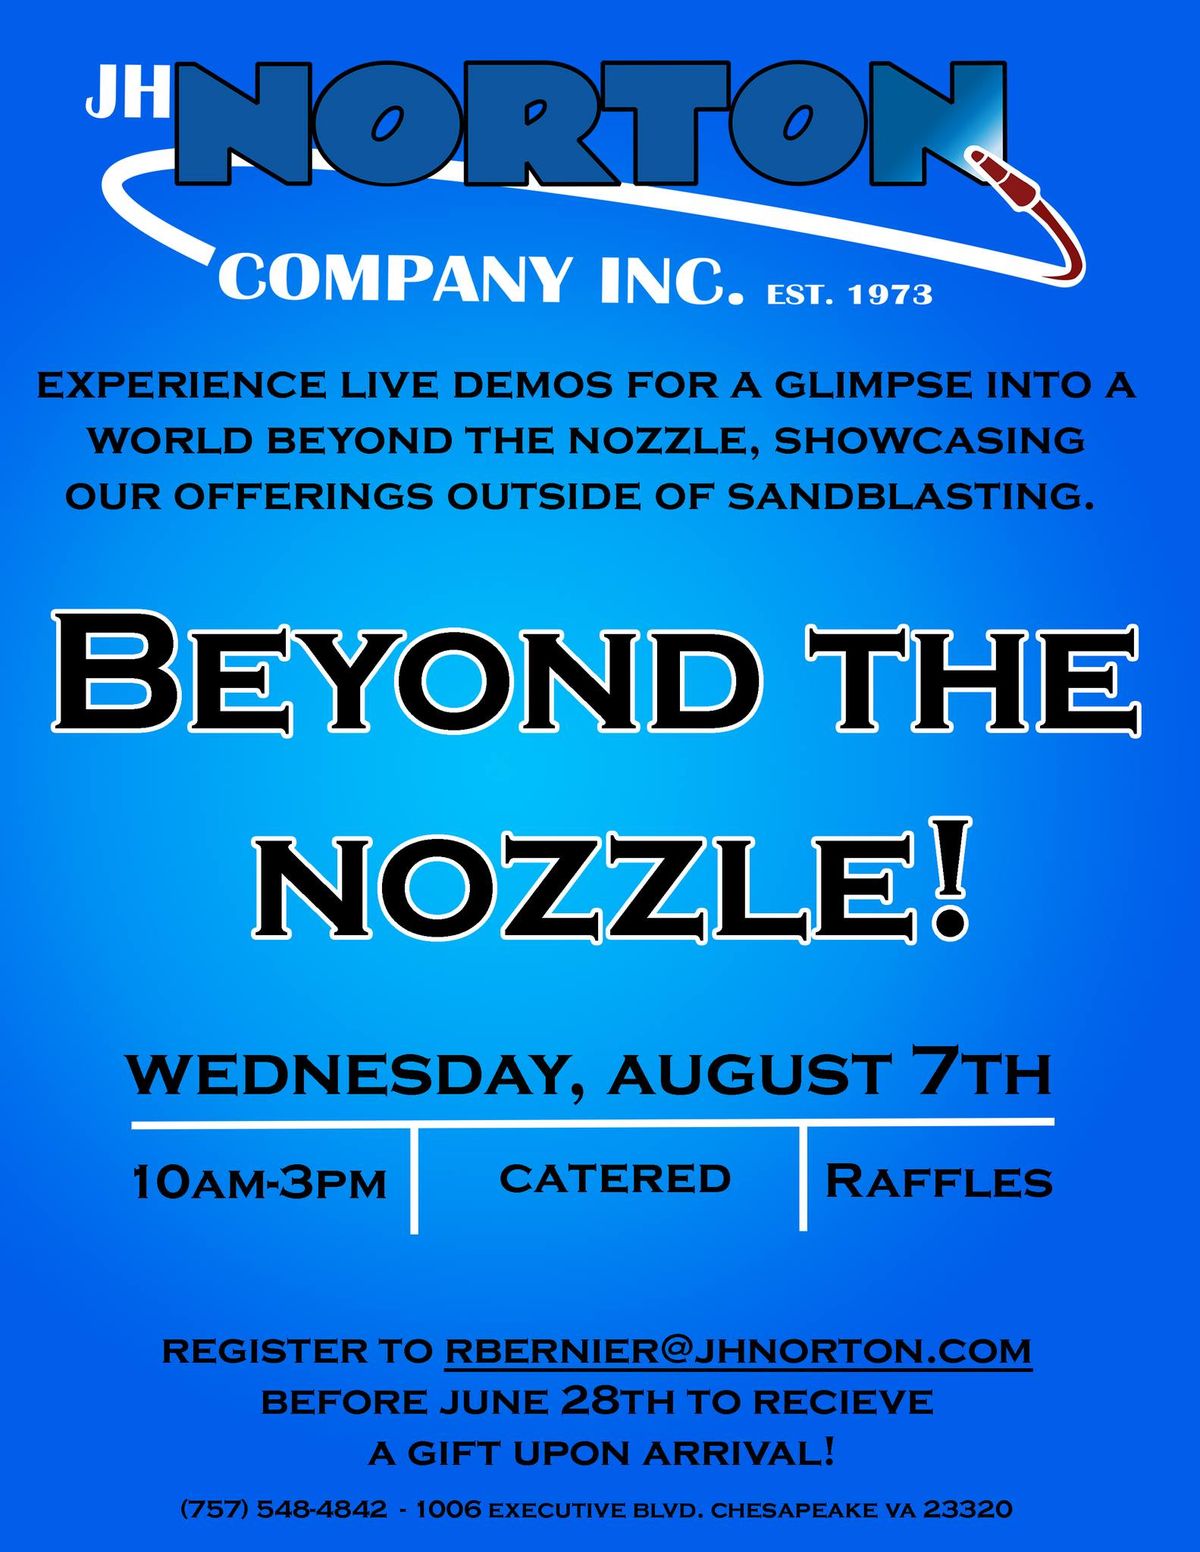 Beyond the Nozzle - Live Demos